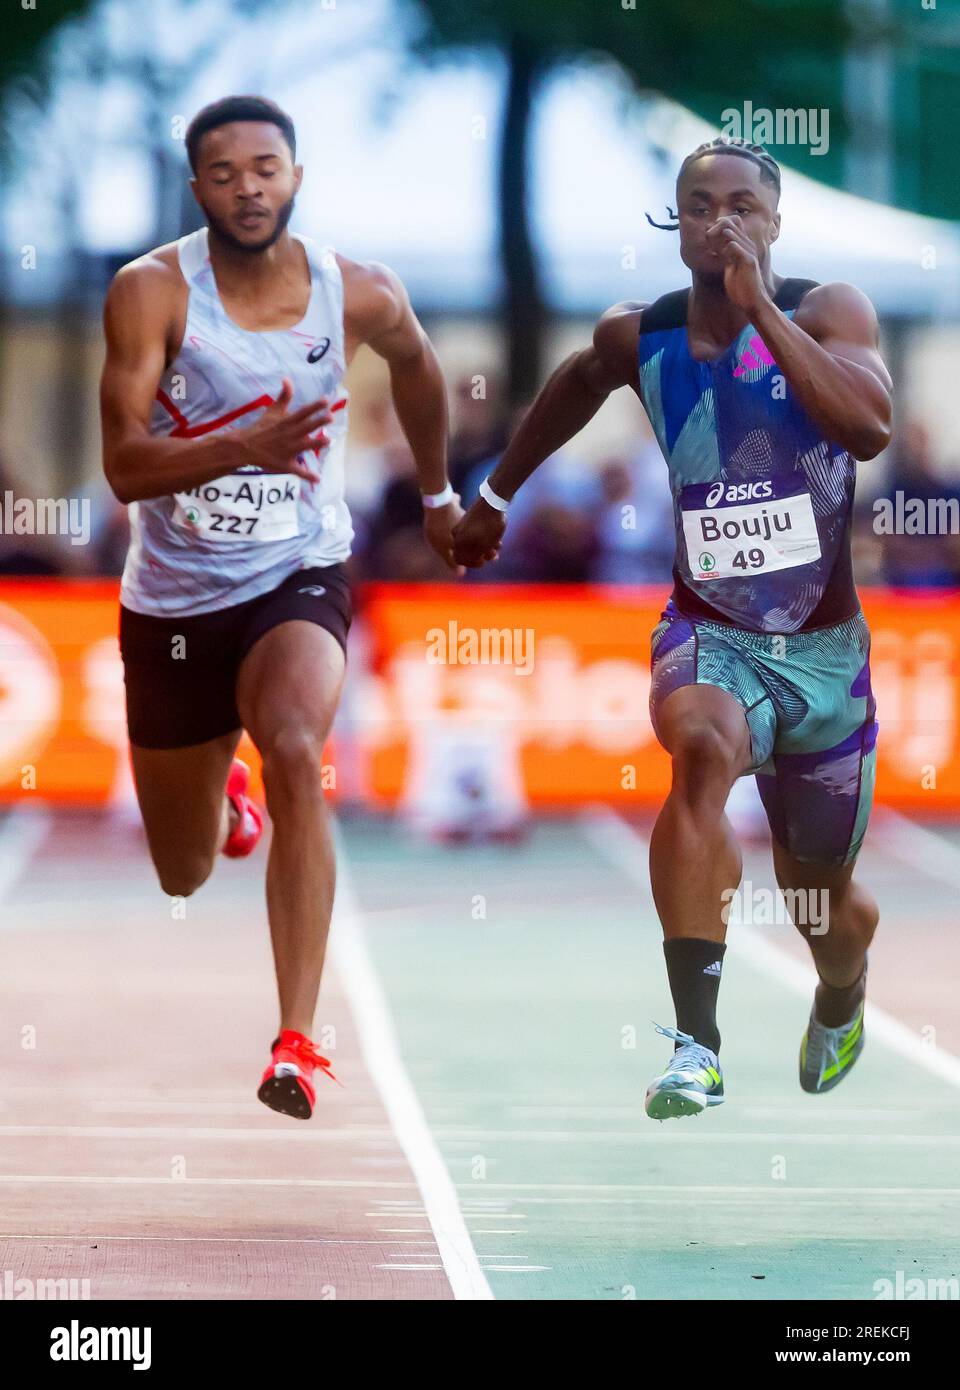 BREDA - Raphael Bouju and Xavi Joy Mo-Ajok during the 100 meters final on the 1st day of the Dutch Athletics Championships. ANP IRIS VANDEN BROEK Stock Photo